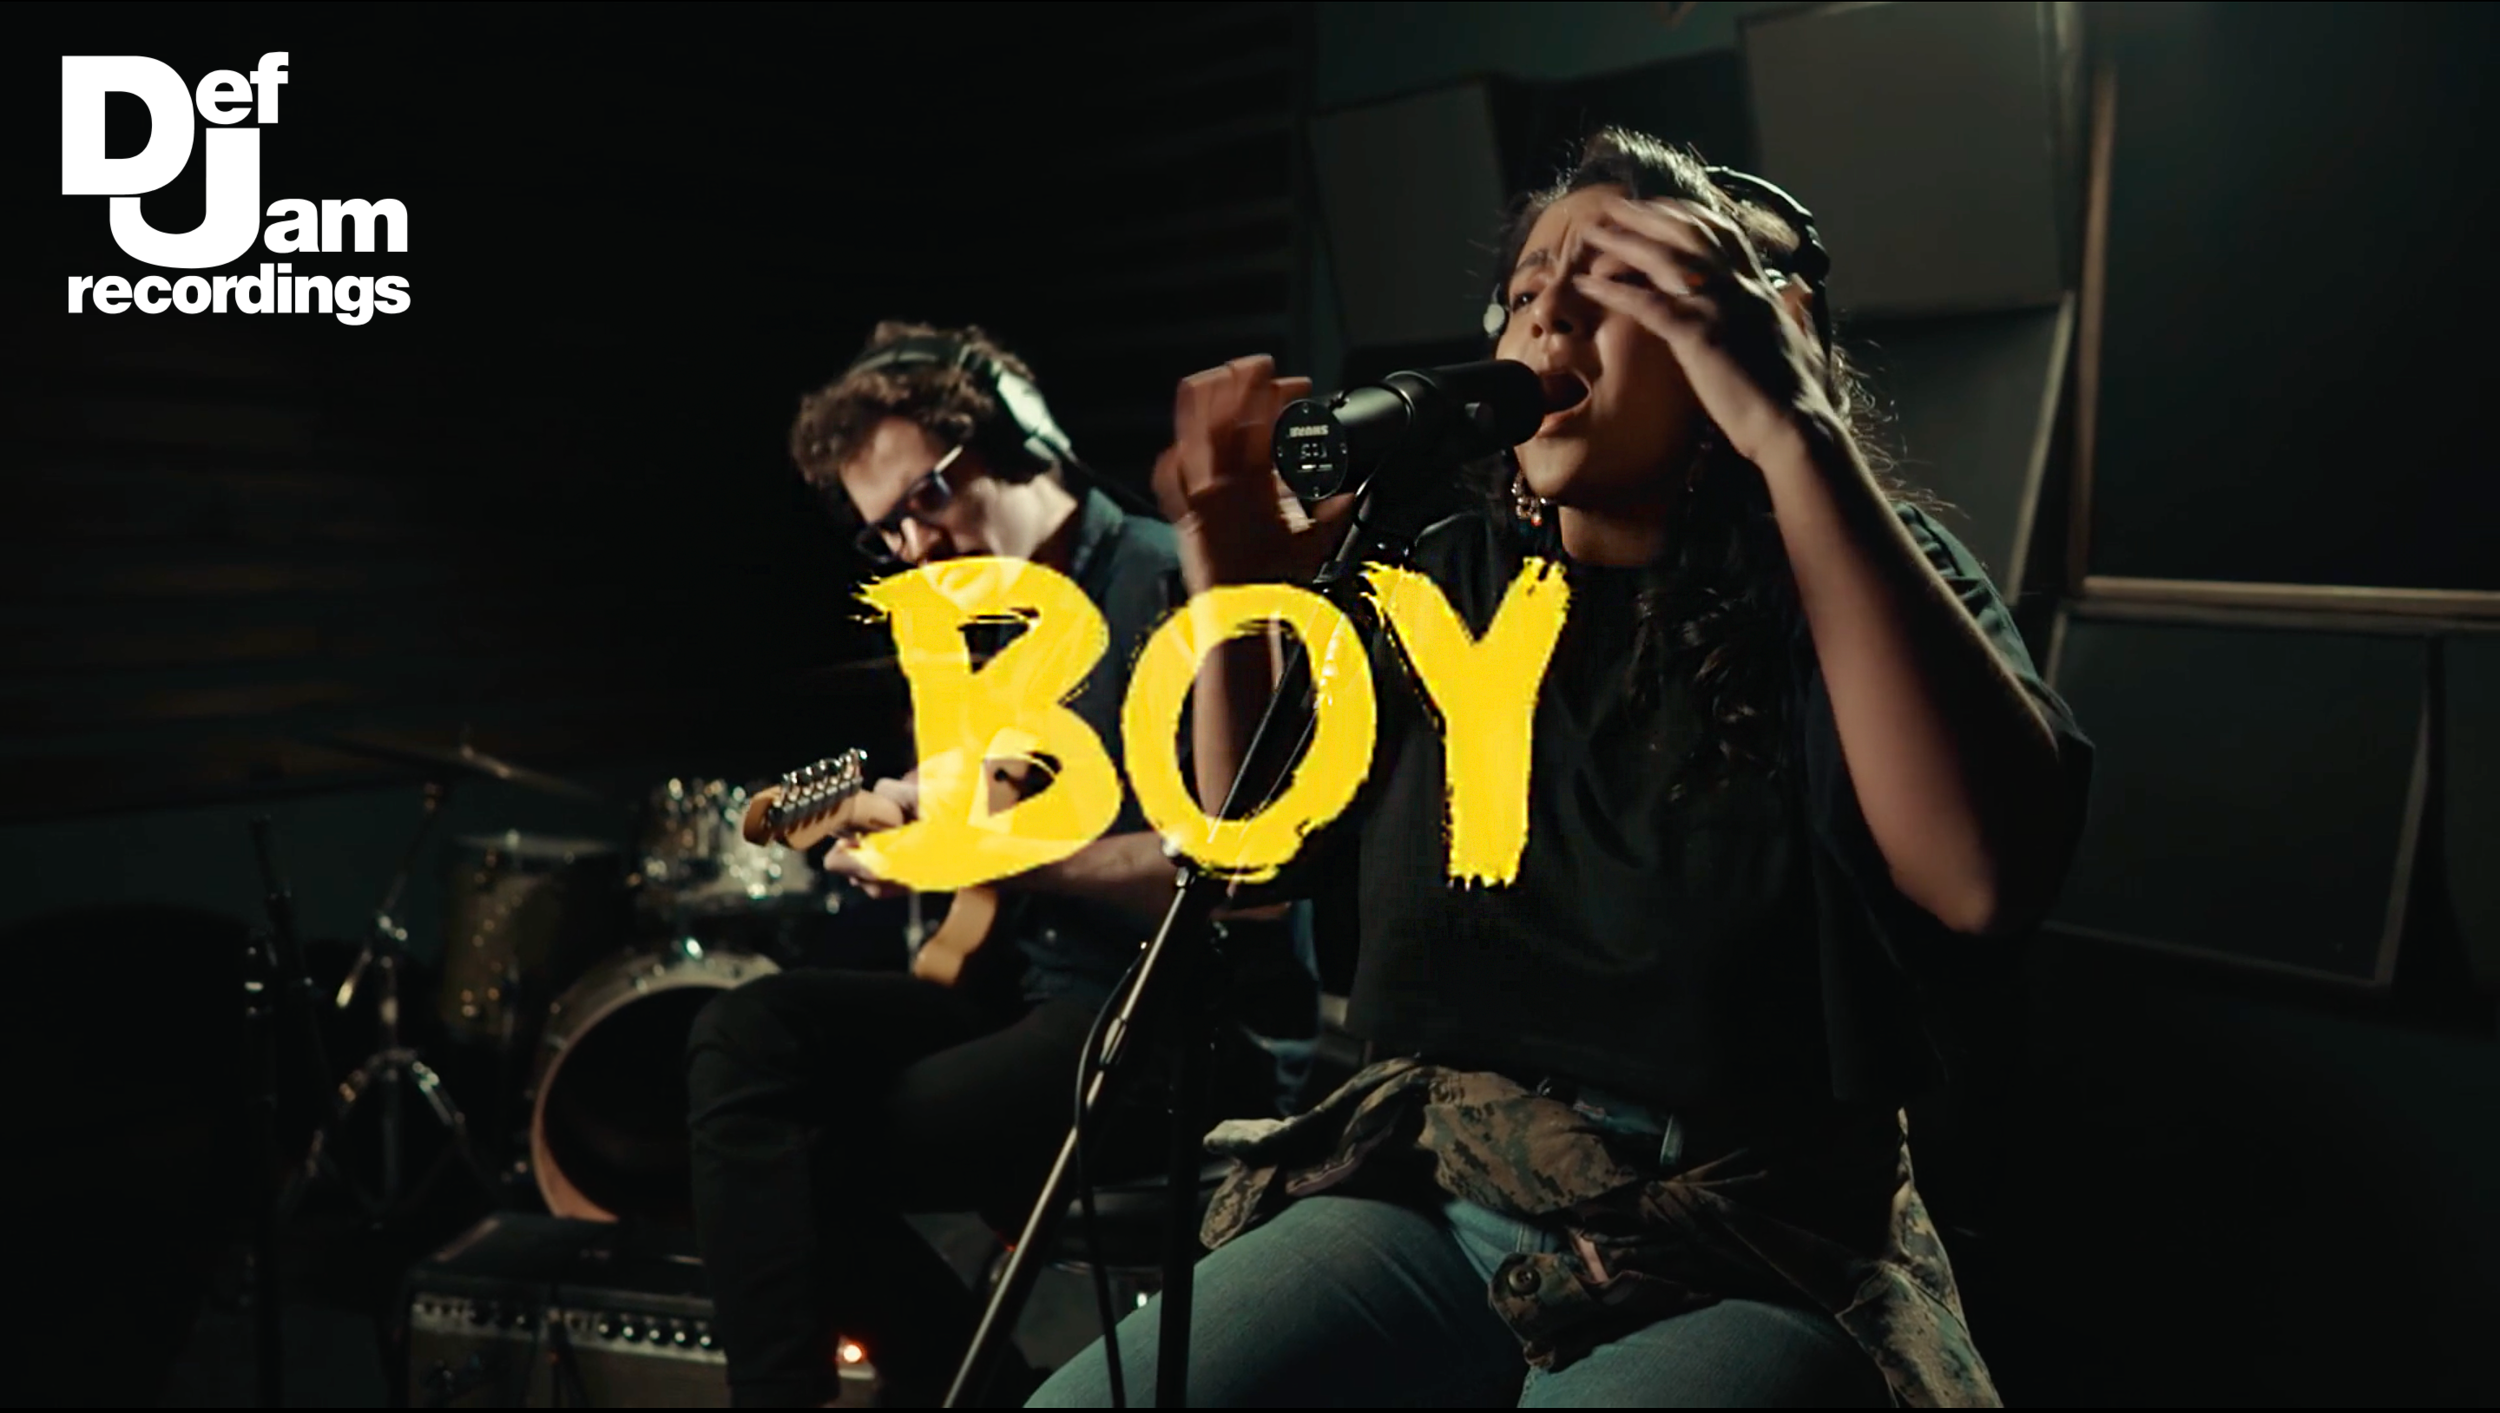 BOY (ft. Bibi Bourelly)|https://vimeo.com/393191831/14da29a597